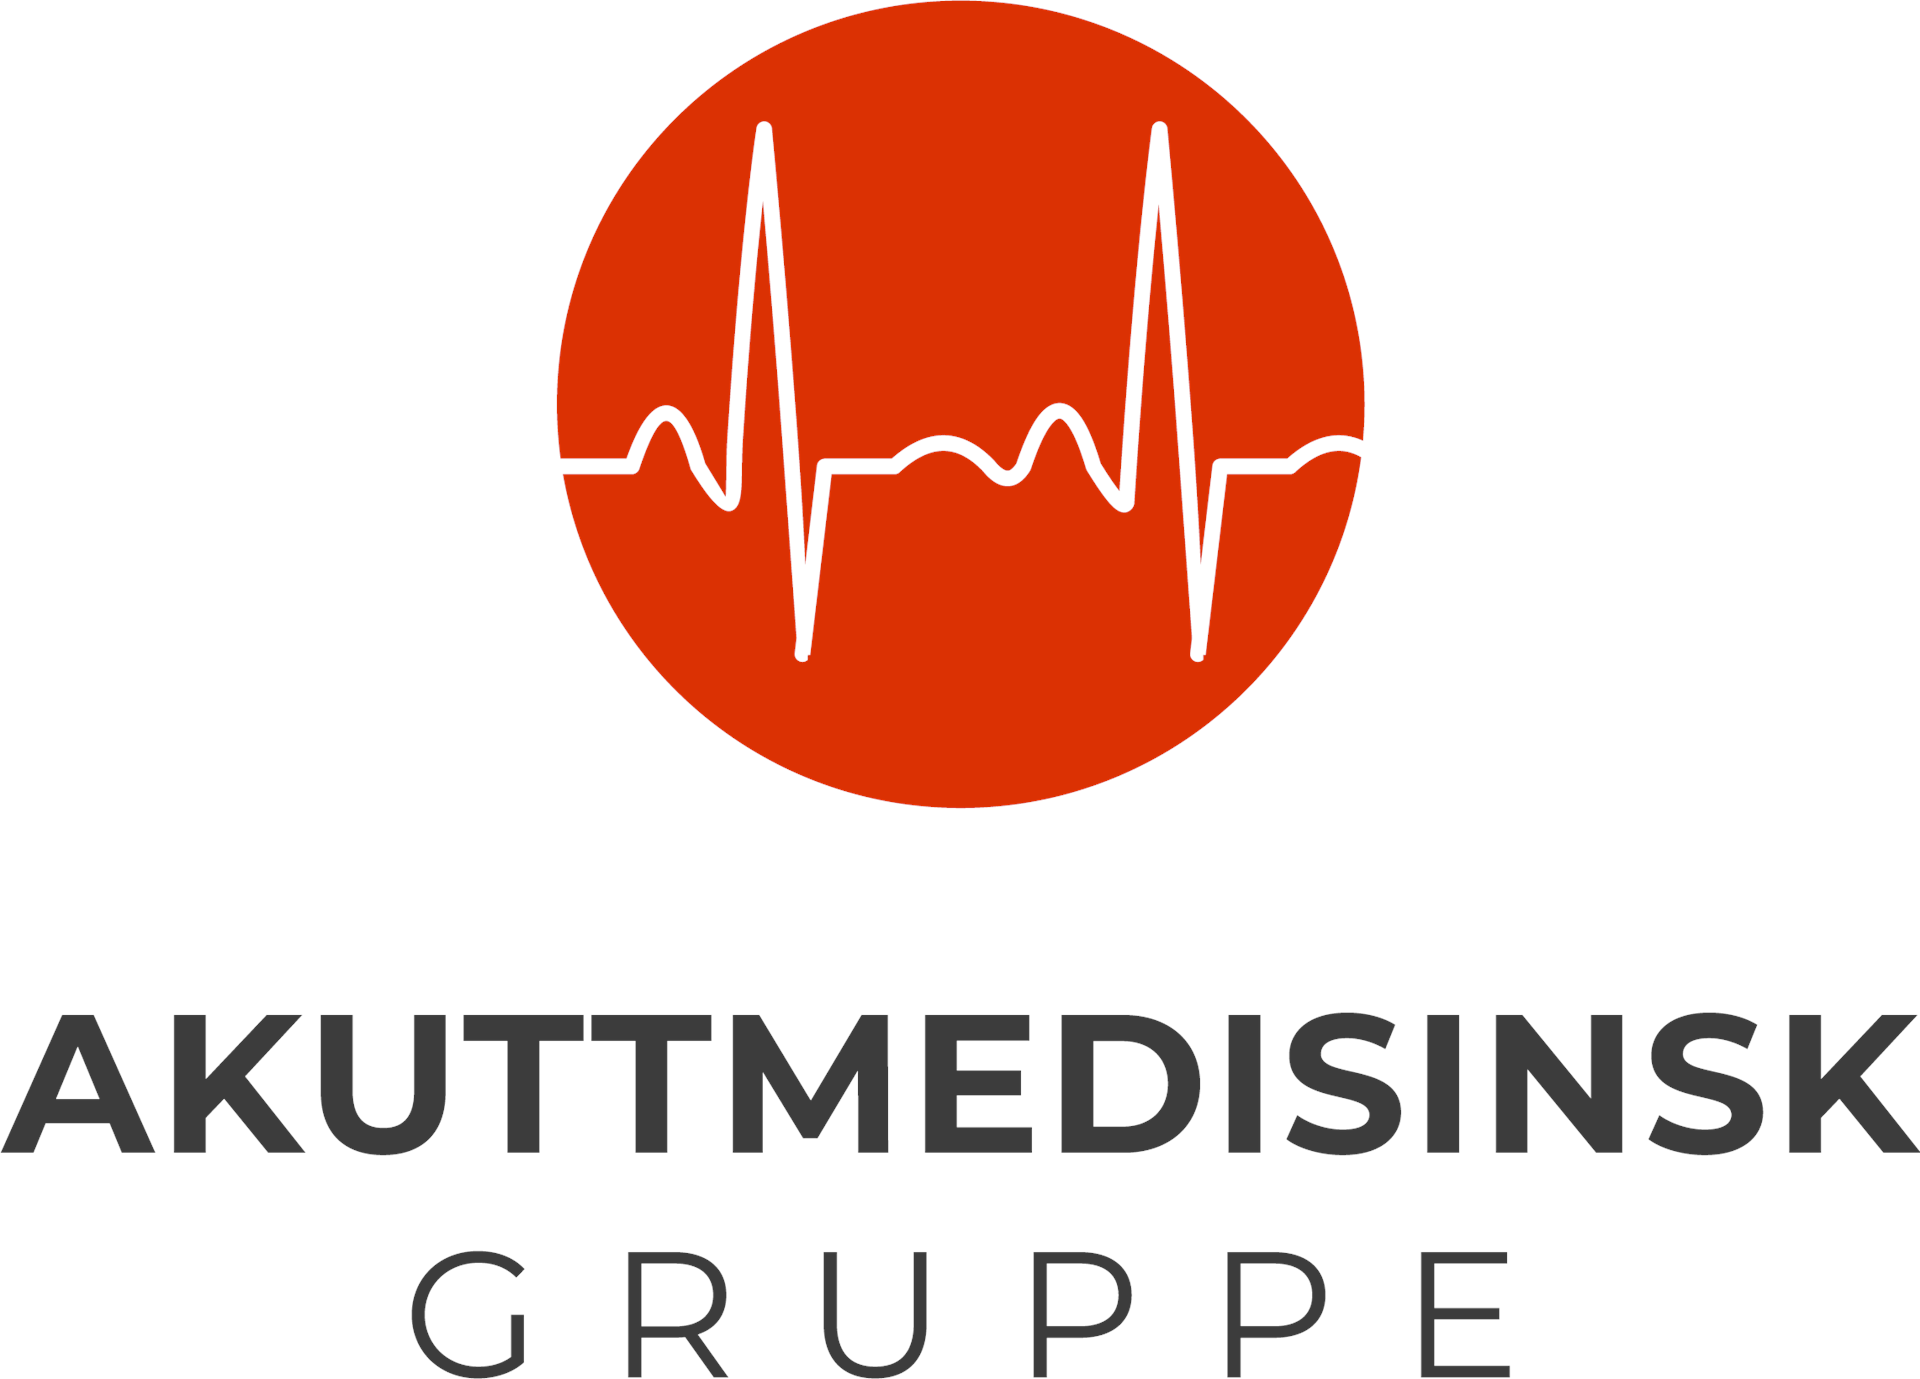 Akuttmedisinsk gruppe logo